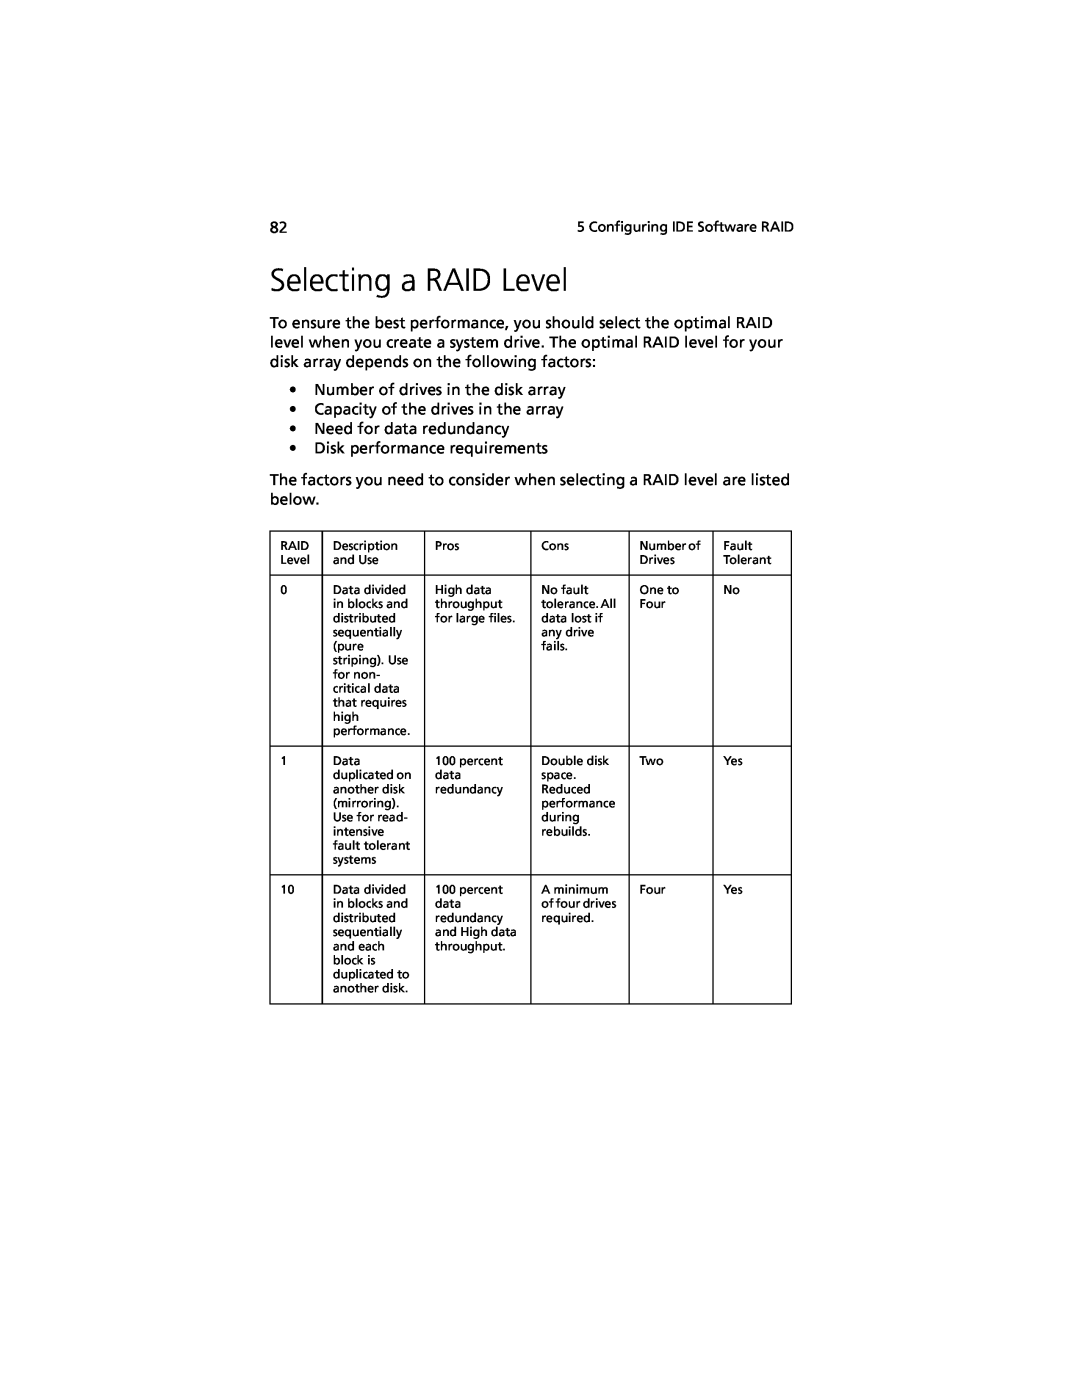 Acer G301 manual Selecting a RAID Level 